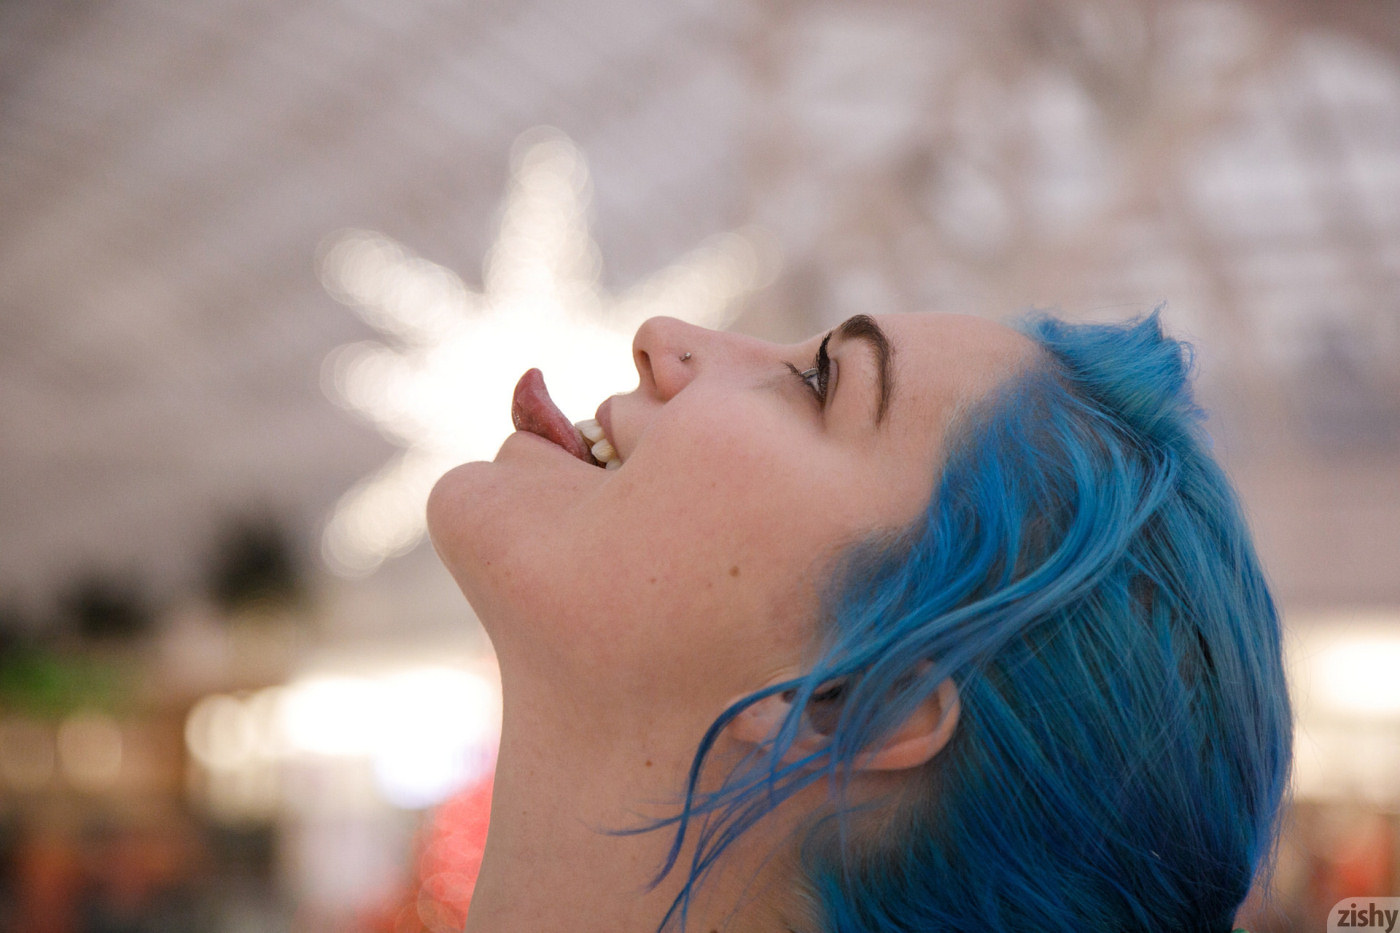 Women Model Blue Hair Indoors Tongue Out Closeup Shopping Mall 1400x933